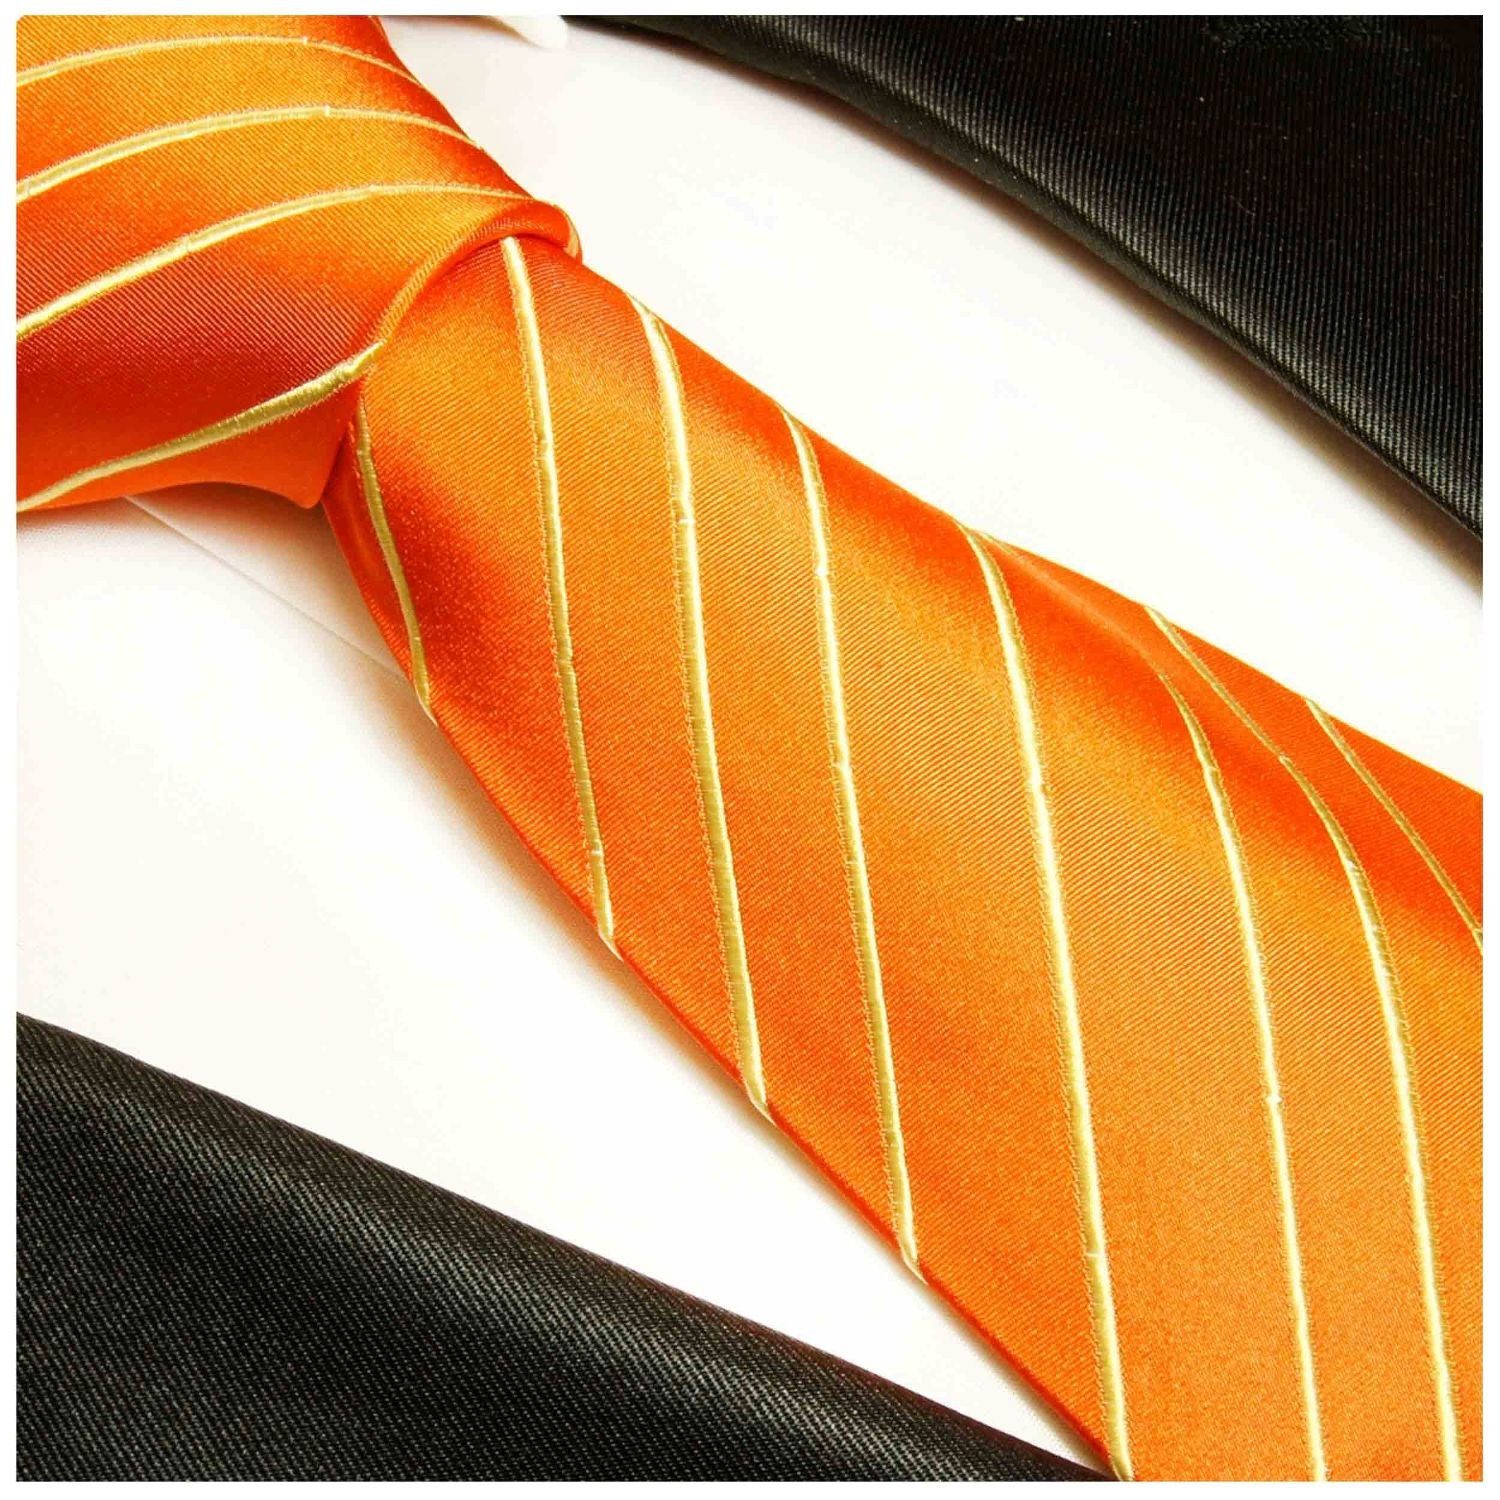 Herren Krawatten Paul Malone Krawatte Designer Seidenkrawatte Herren Schlips modern gestreift 100% Seide Schmal (6cm), orange go